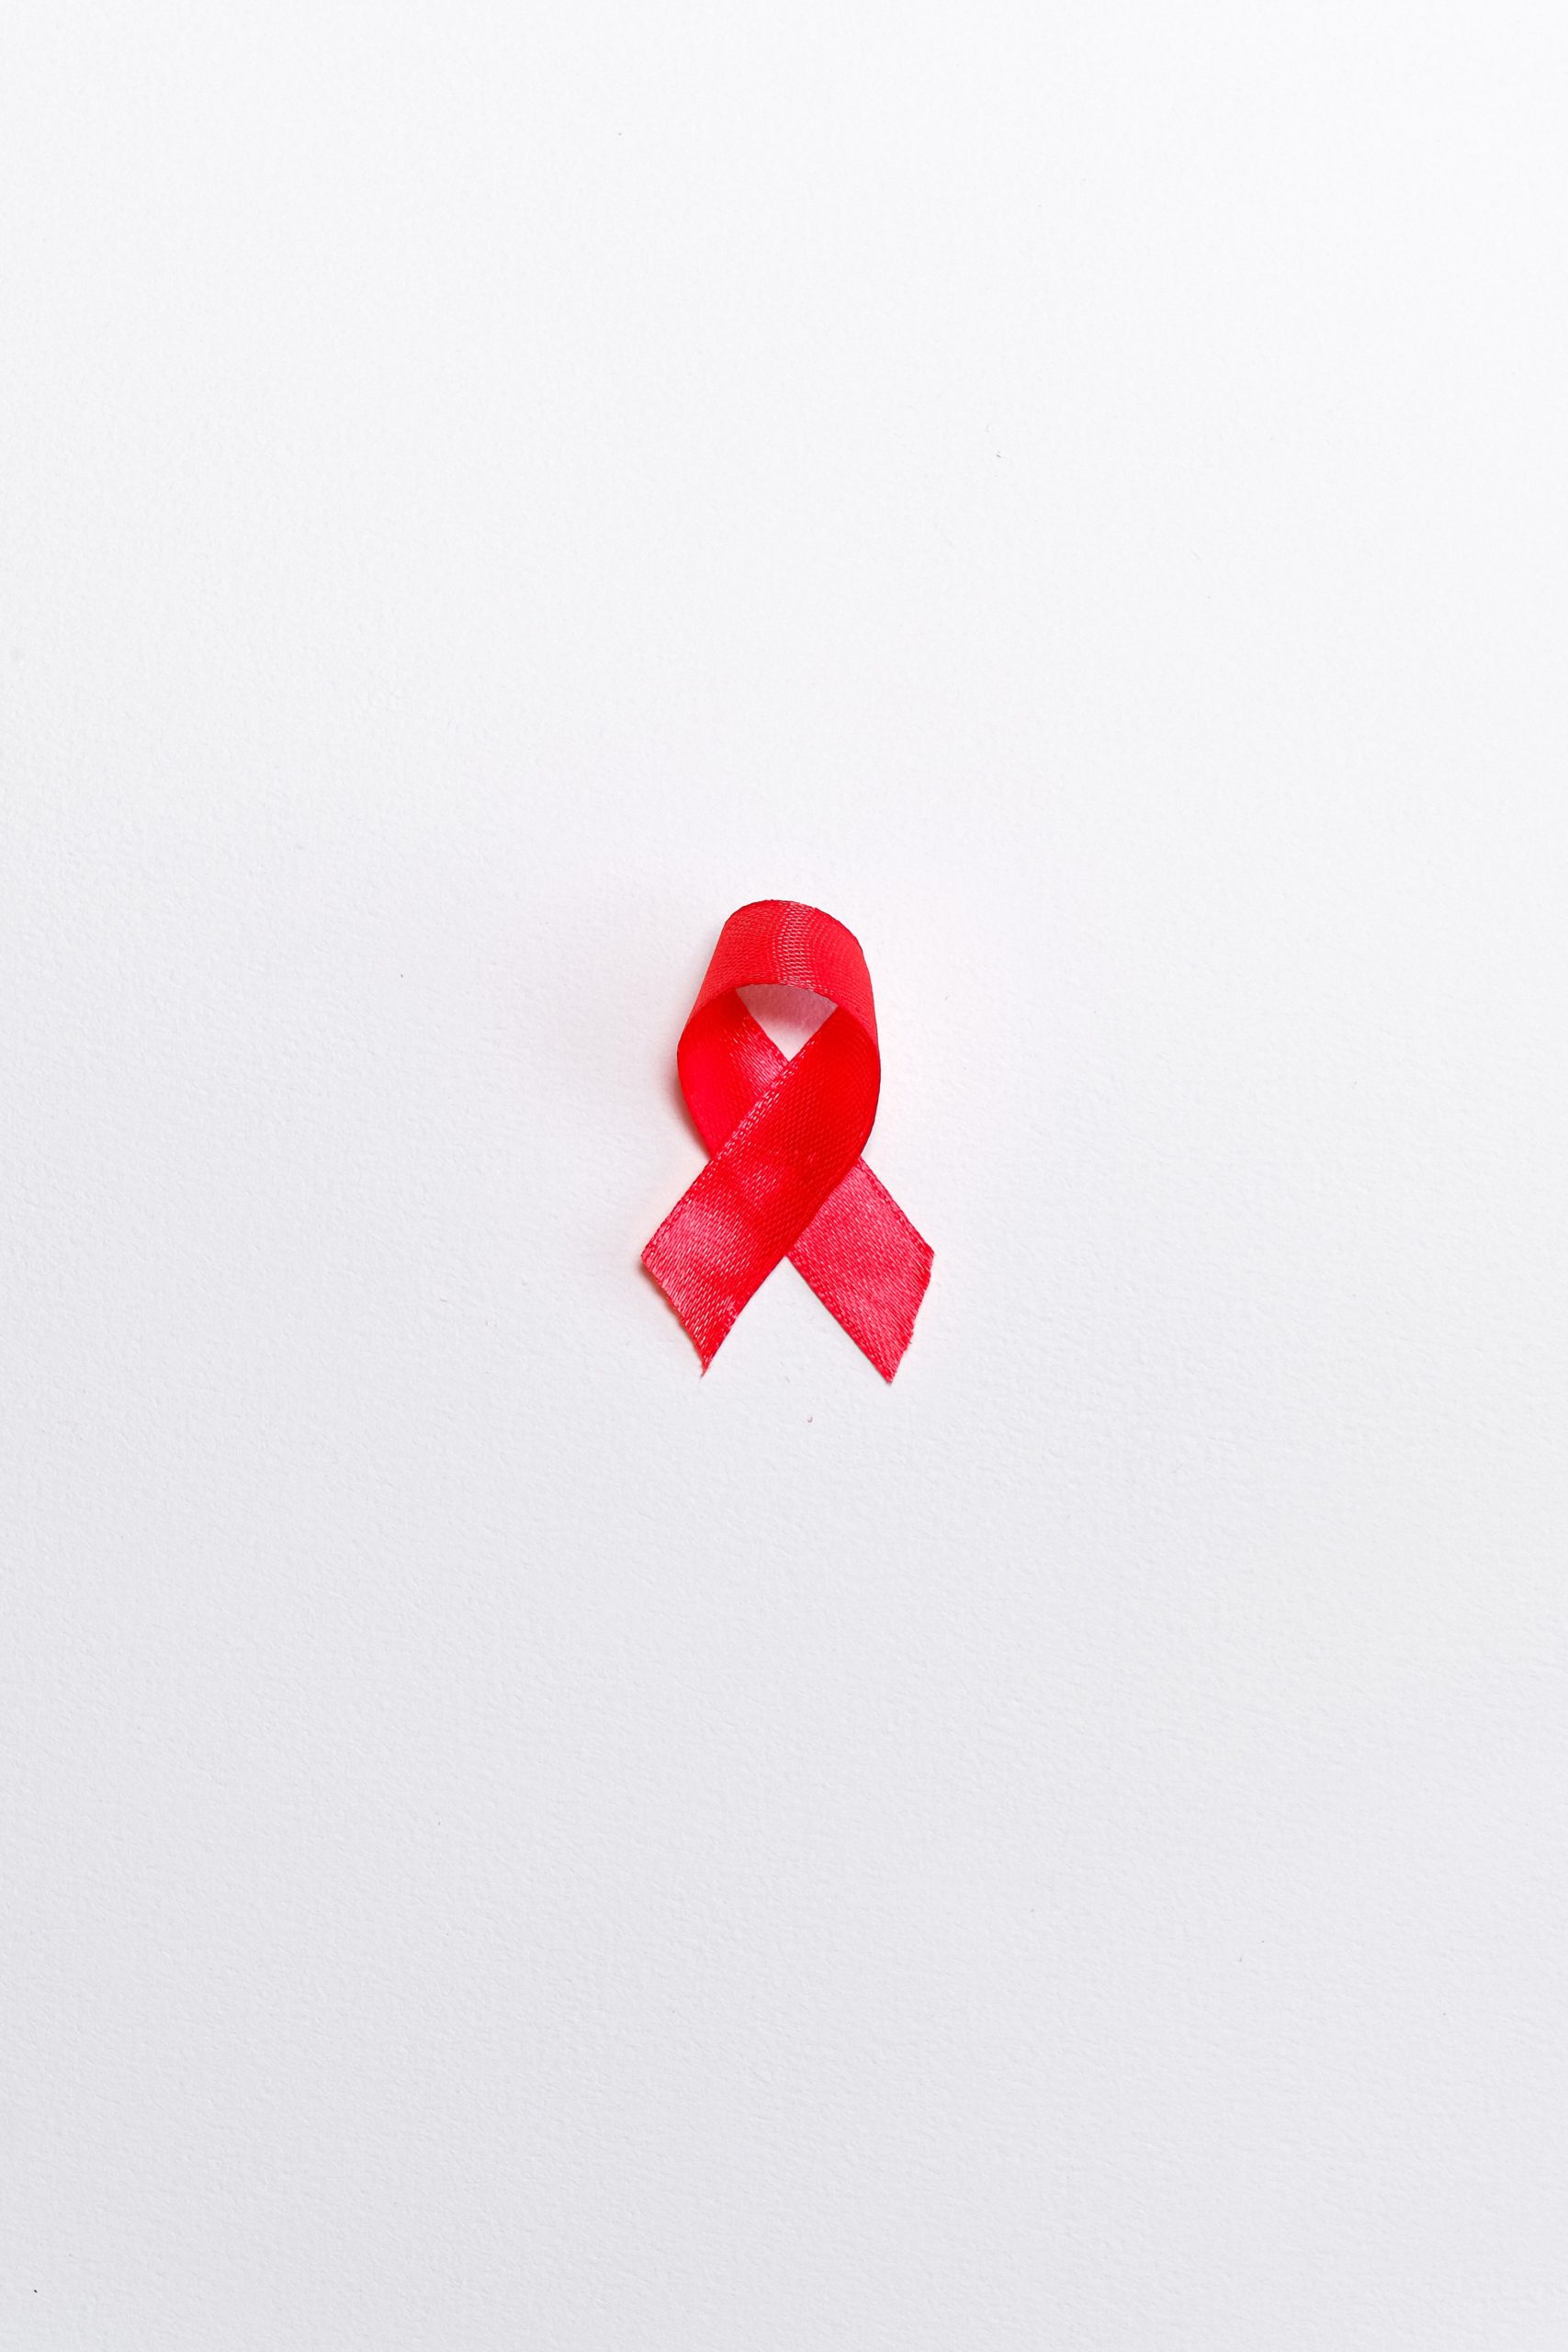 You are currently viewing vih virus : traitement naturel contre le VIH SIDA